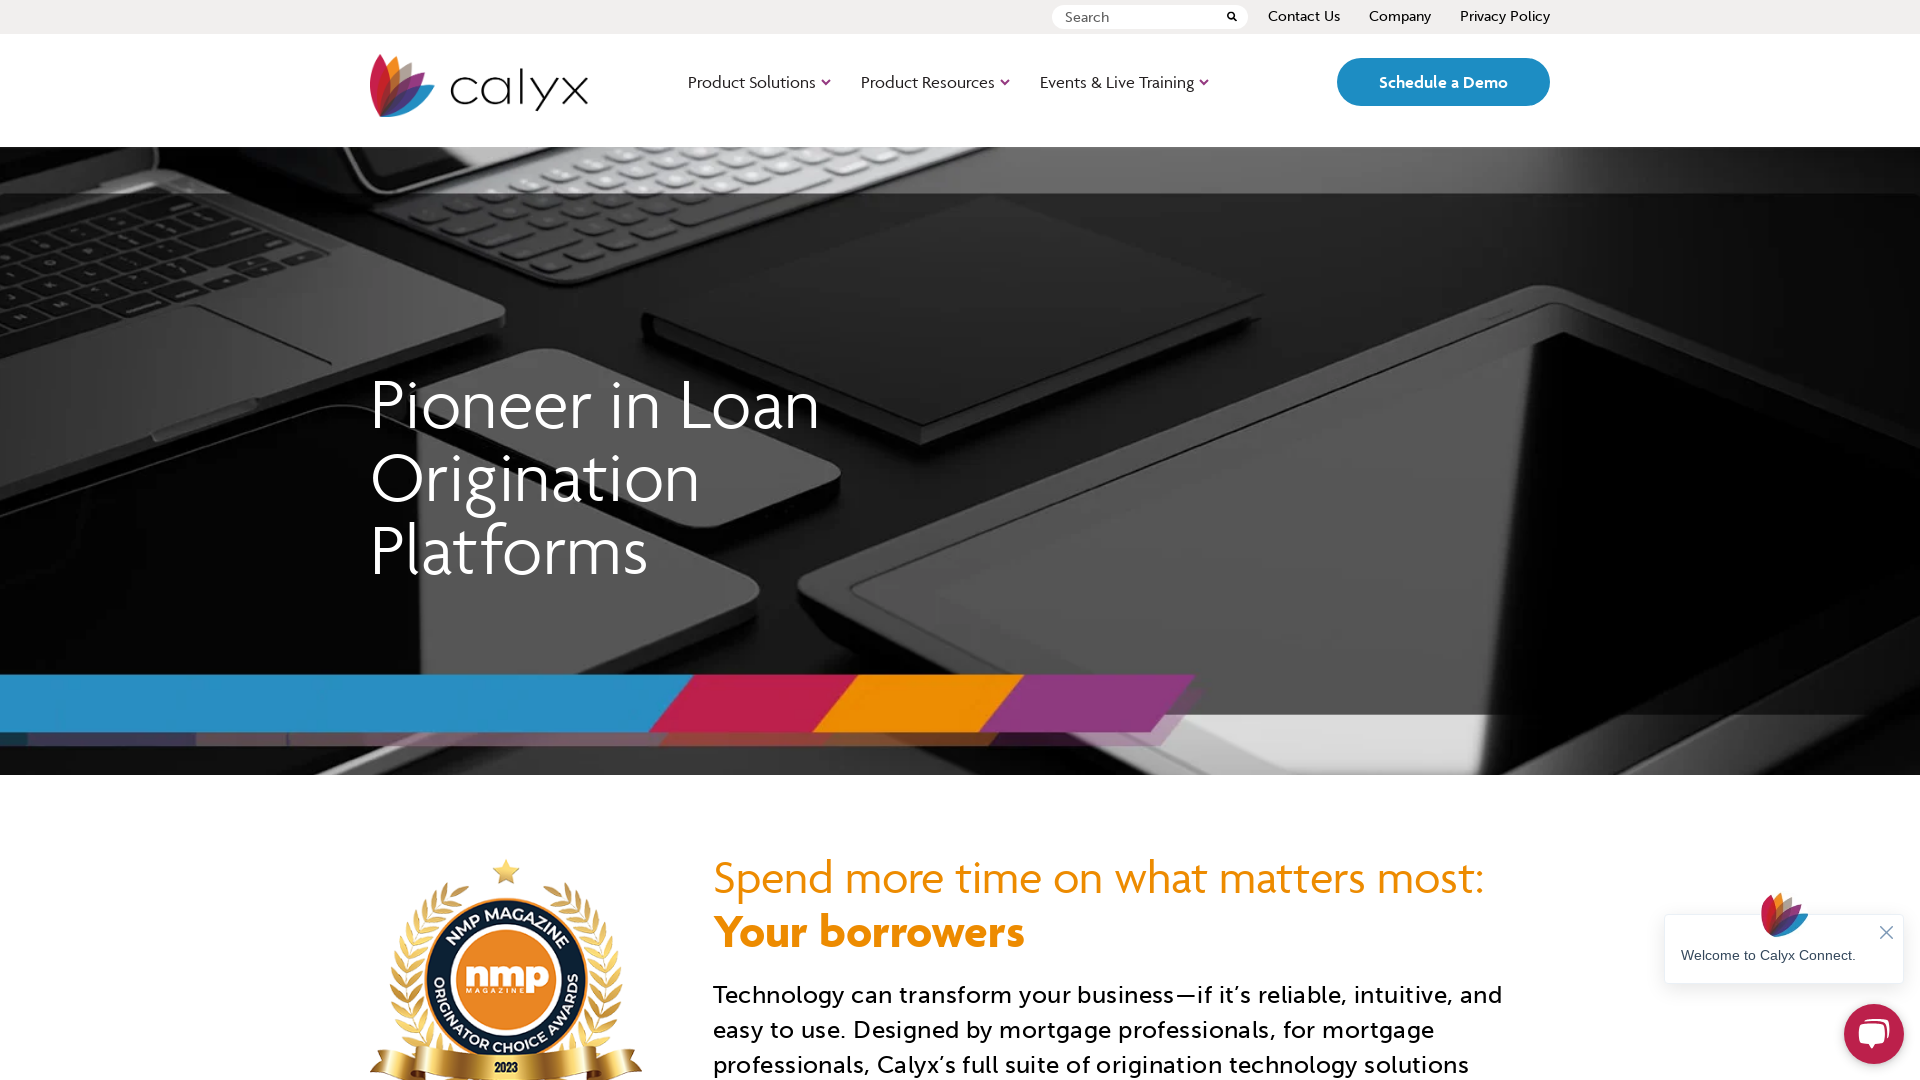 Calyx Software